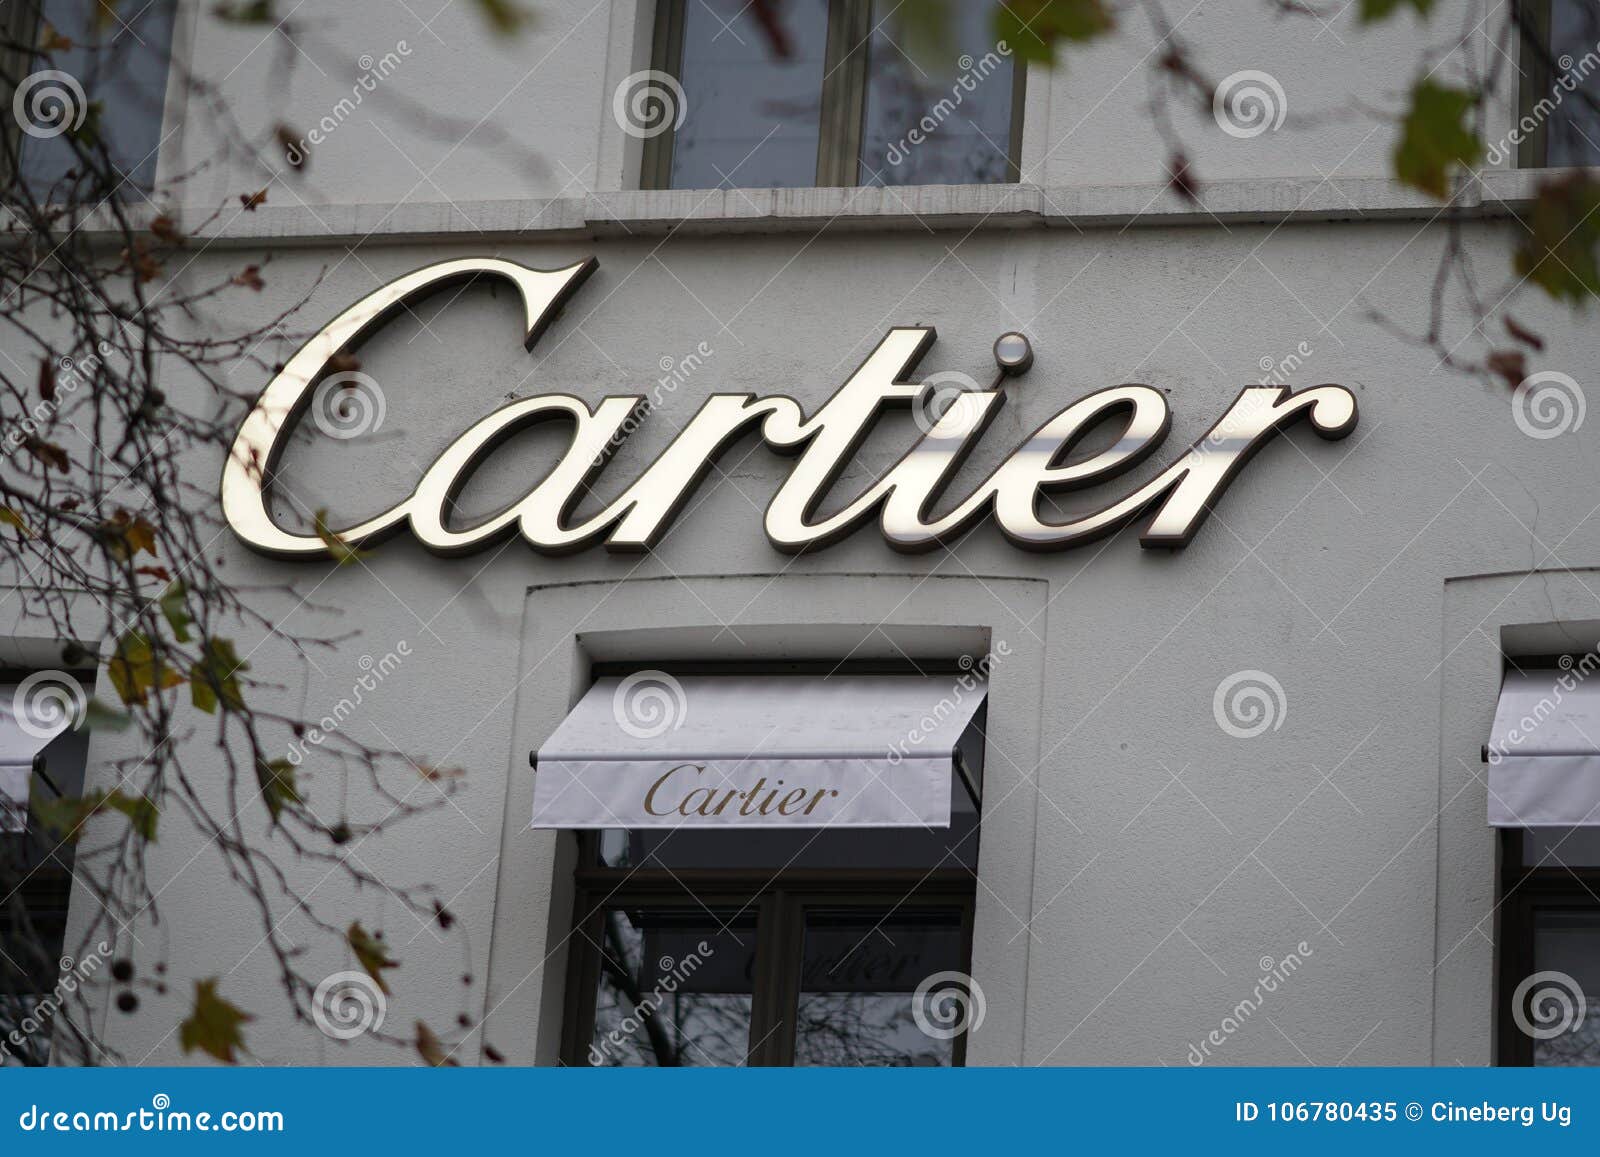 cartier company logo